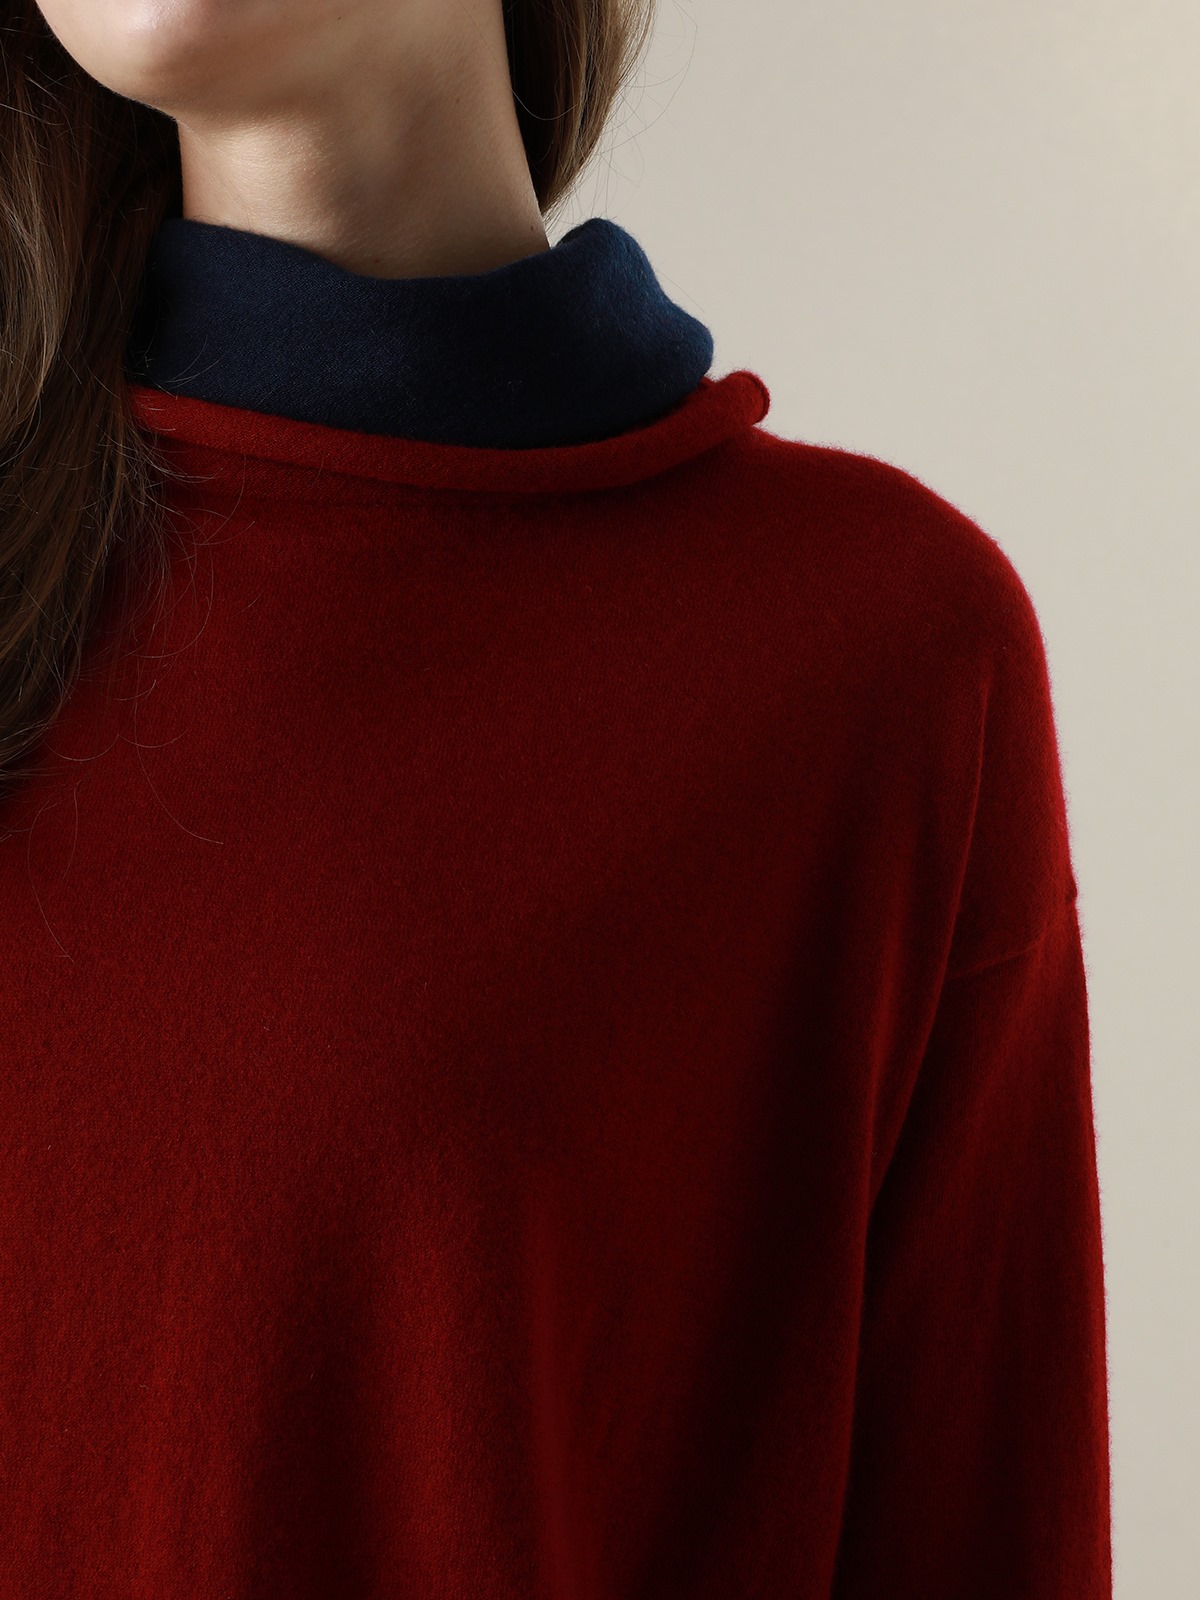 【Embrace Winter With Ultra Fine Cashmere Top】精選比一般山羊絨更輕薄柔軟的纖維打造的觸感細膩的針織上衣，不規則剪裁結合領口及衣袖的雙色設計豐富整體層次感，讓您輕易穿出保暖又不失個性的造型，散發Atsuro Tayama的前衛時尚魅力。 更多Atsuro Tayama單品在Sidefame網店發售﹕